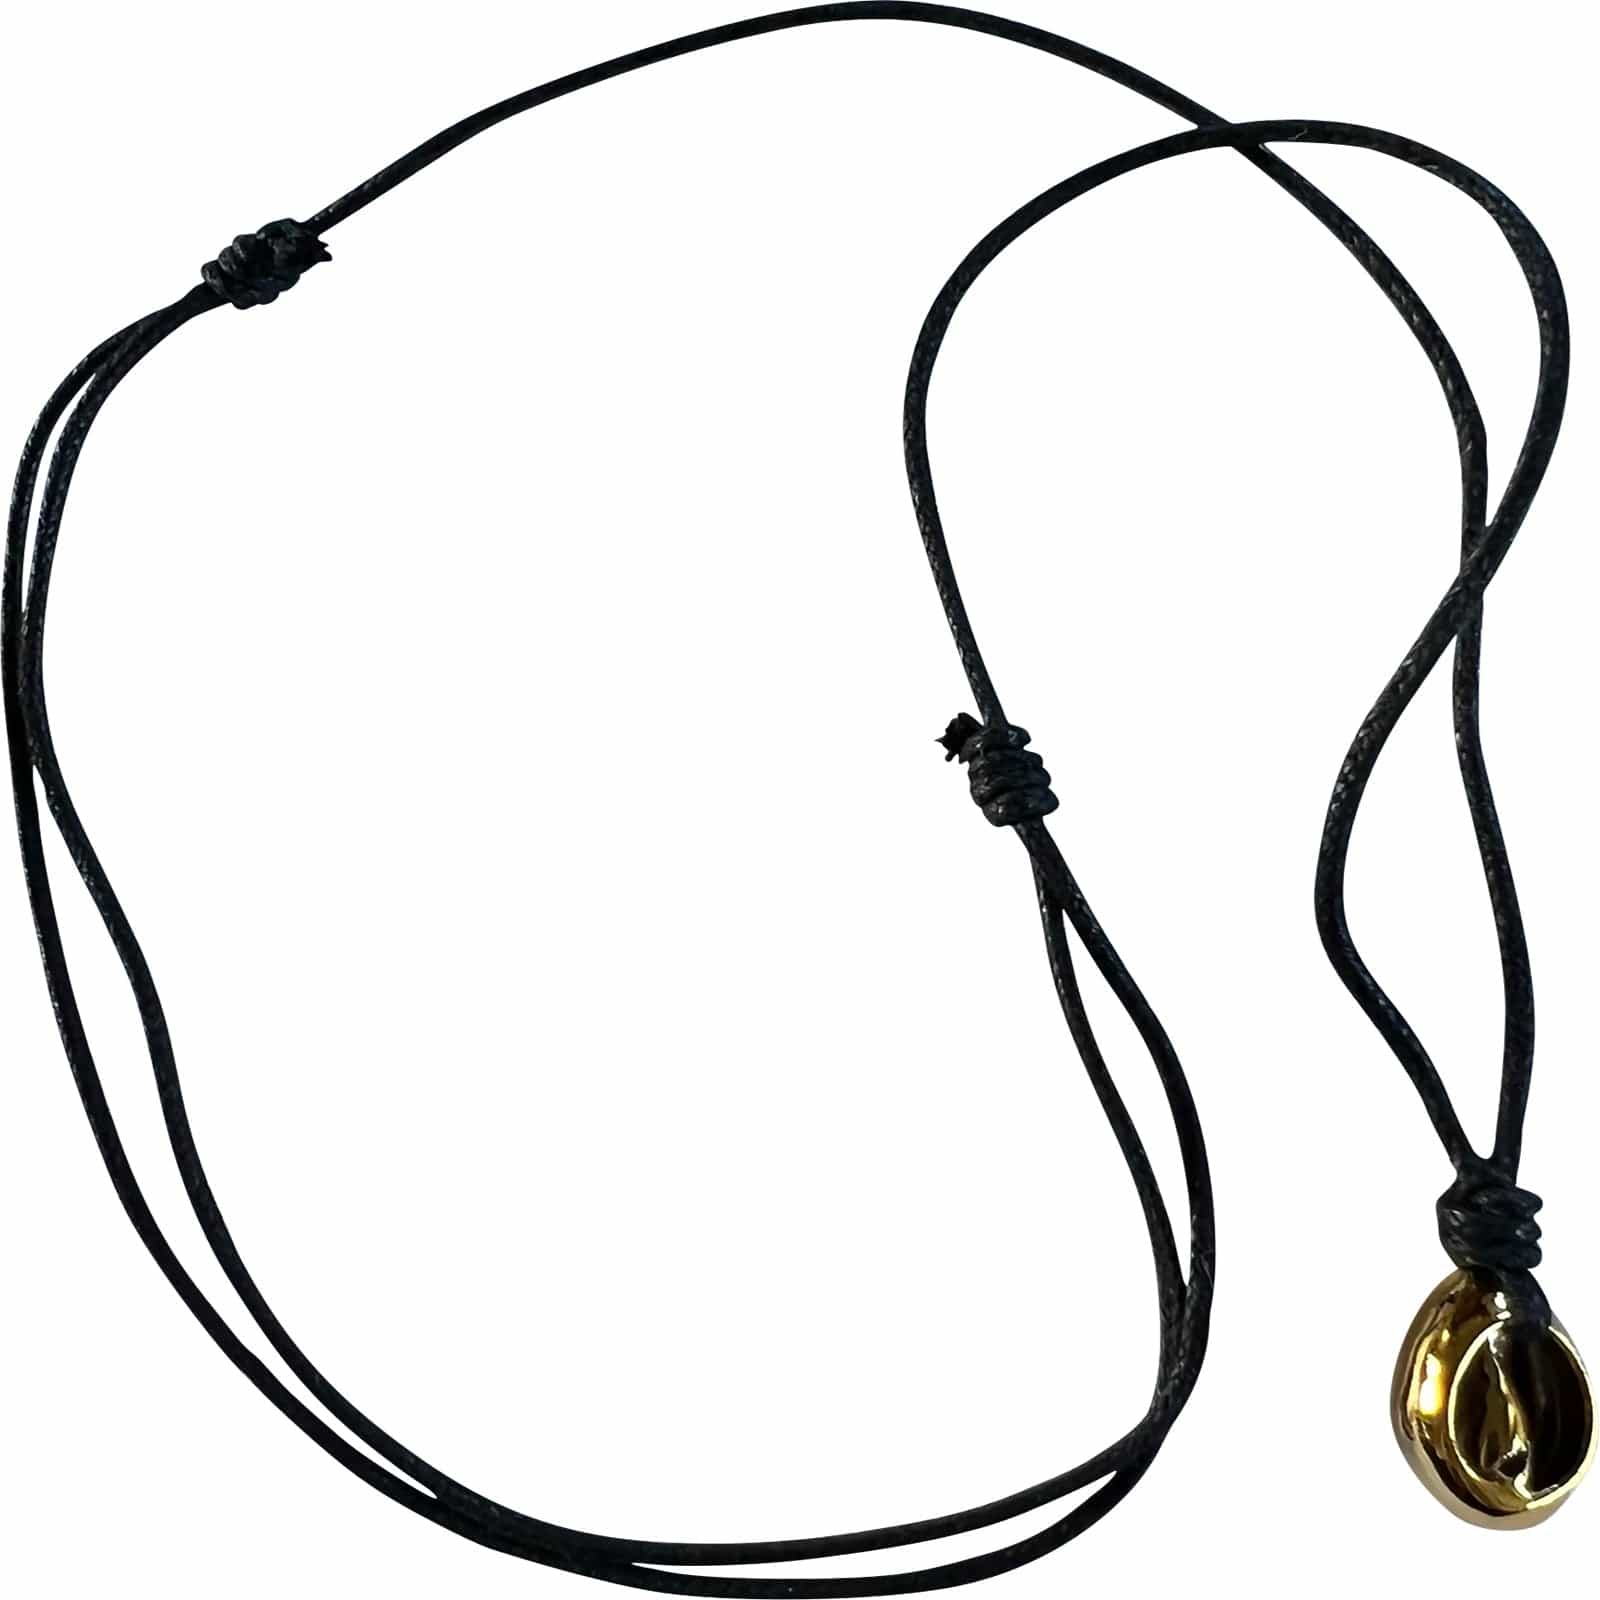 Shiny Gold Colour Sea Shell Evil Eye Pendant Necklace Black Cord Chain Jewellery